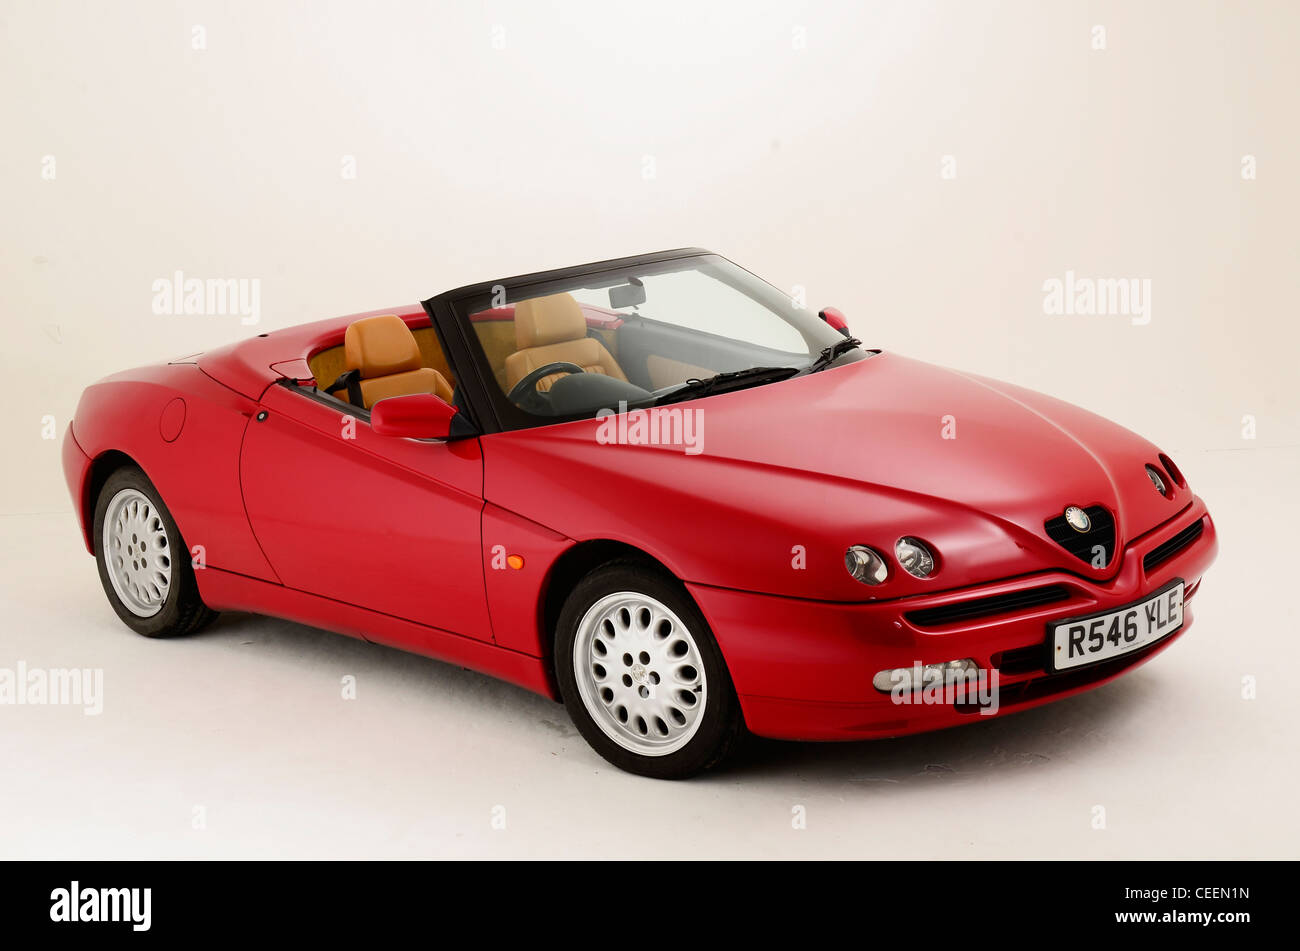 1997 Alfa Romeo spyder Foto de stock